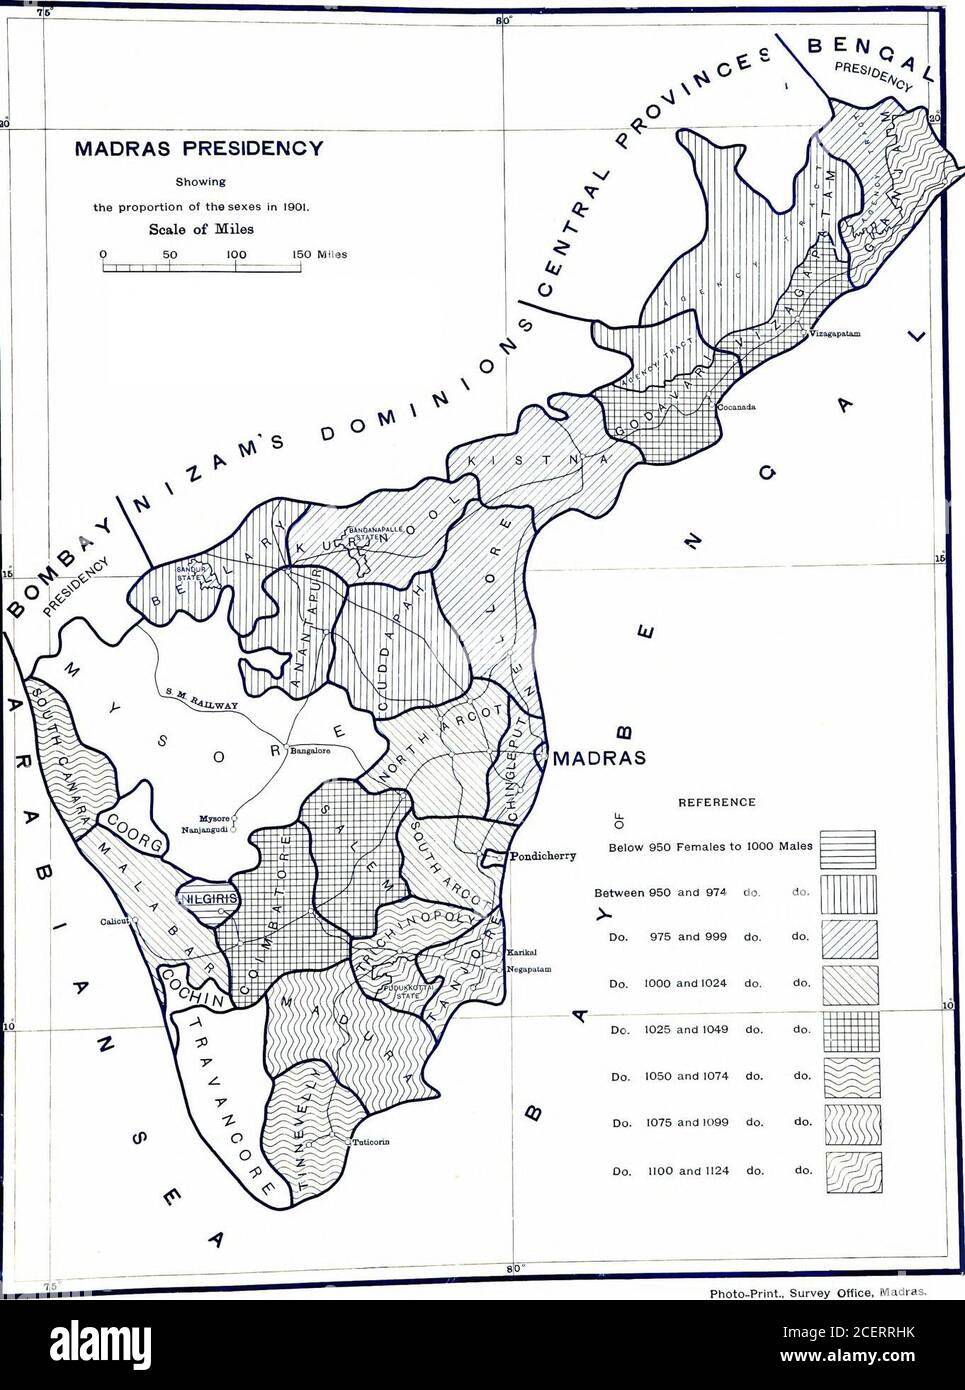 Census Of India 1901 I Gt L Cst O Lt I O O A S T N A 1 4 0 V I E 70 O 9 Q O K N